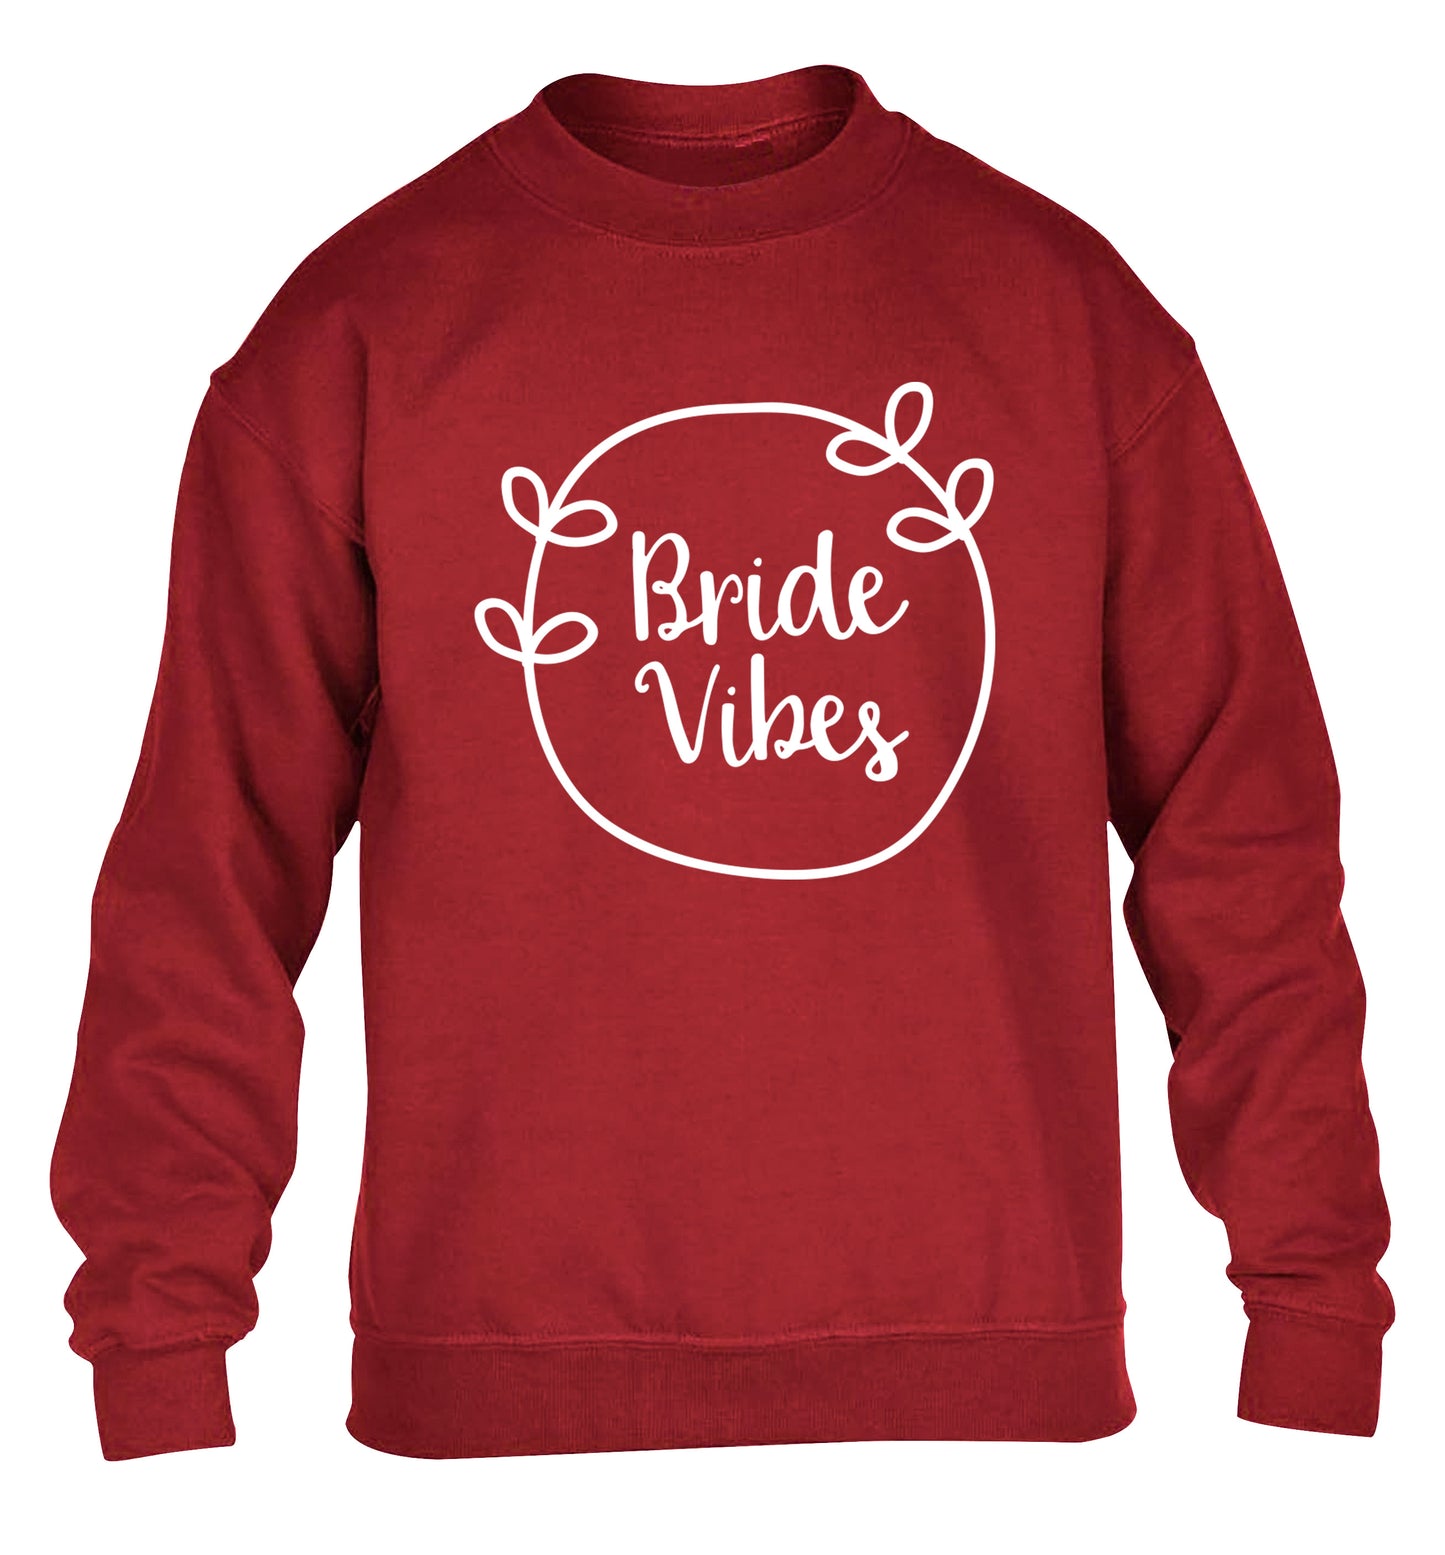 Bride Vibes children's grey sweater 12-13 Years